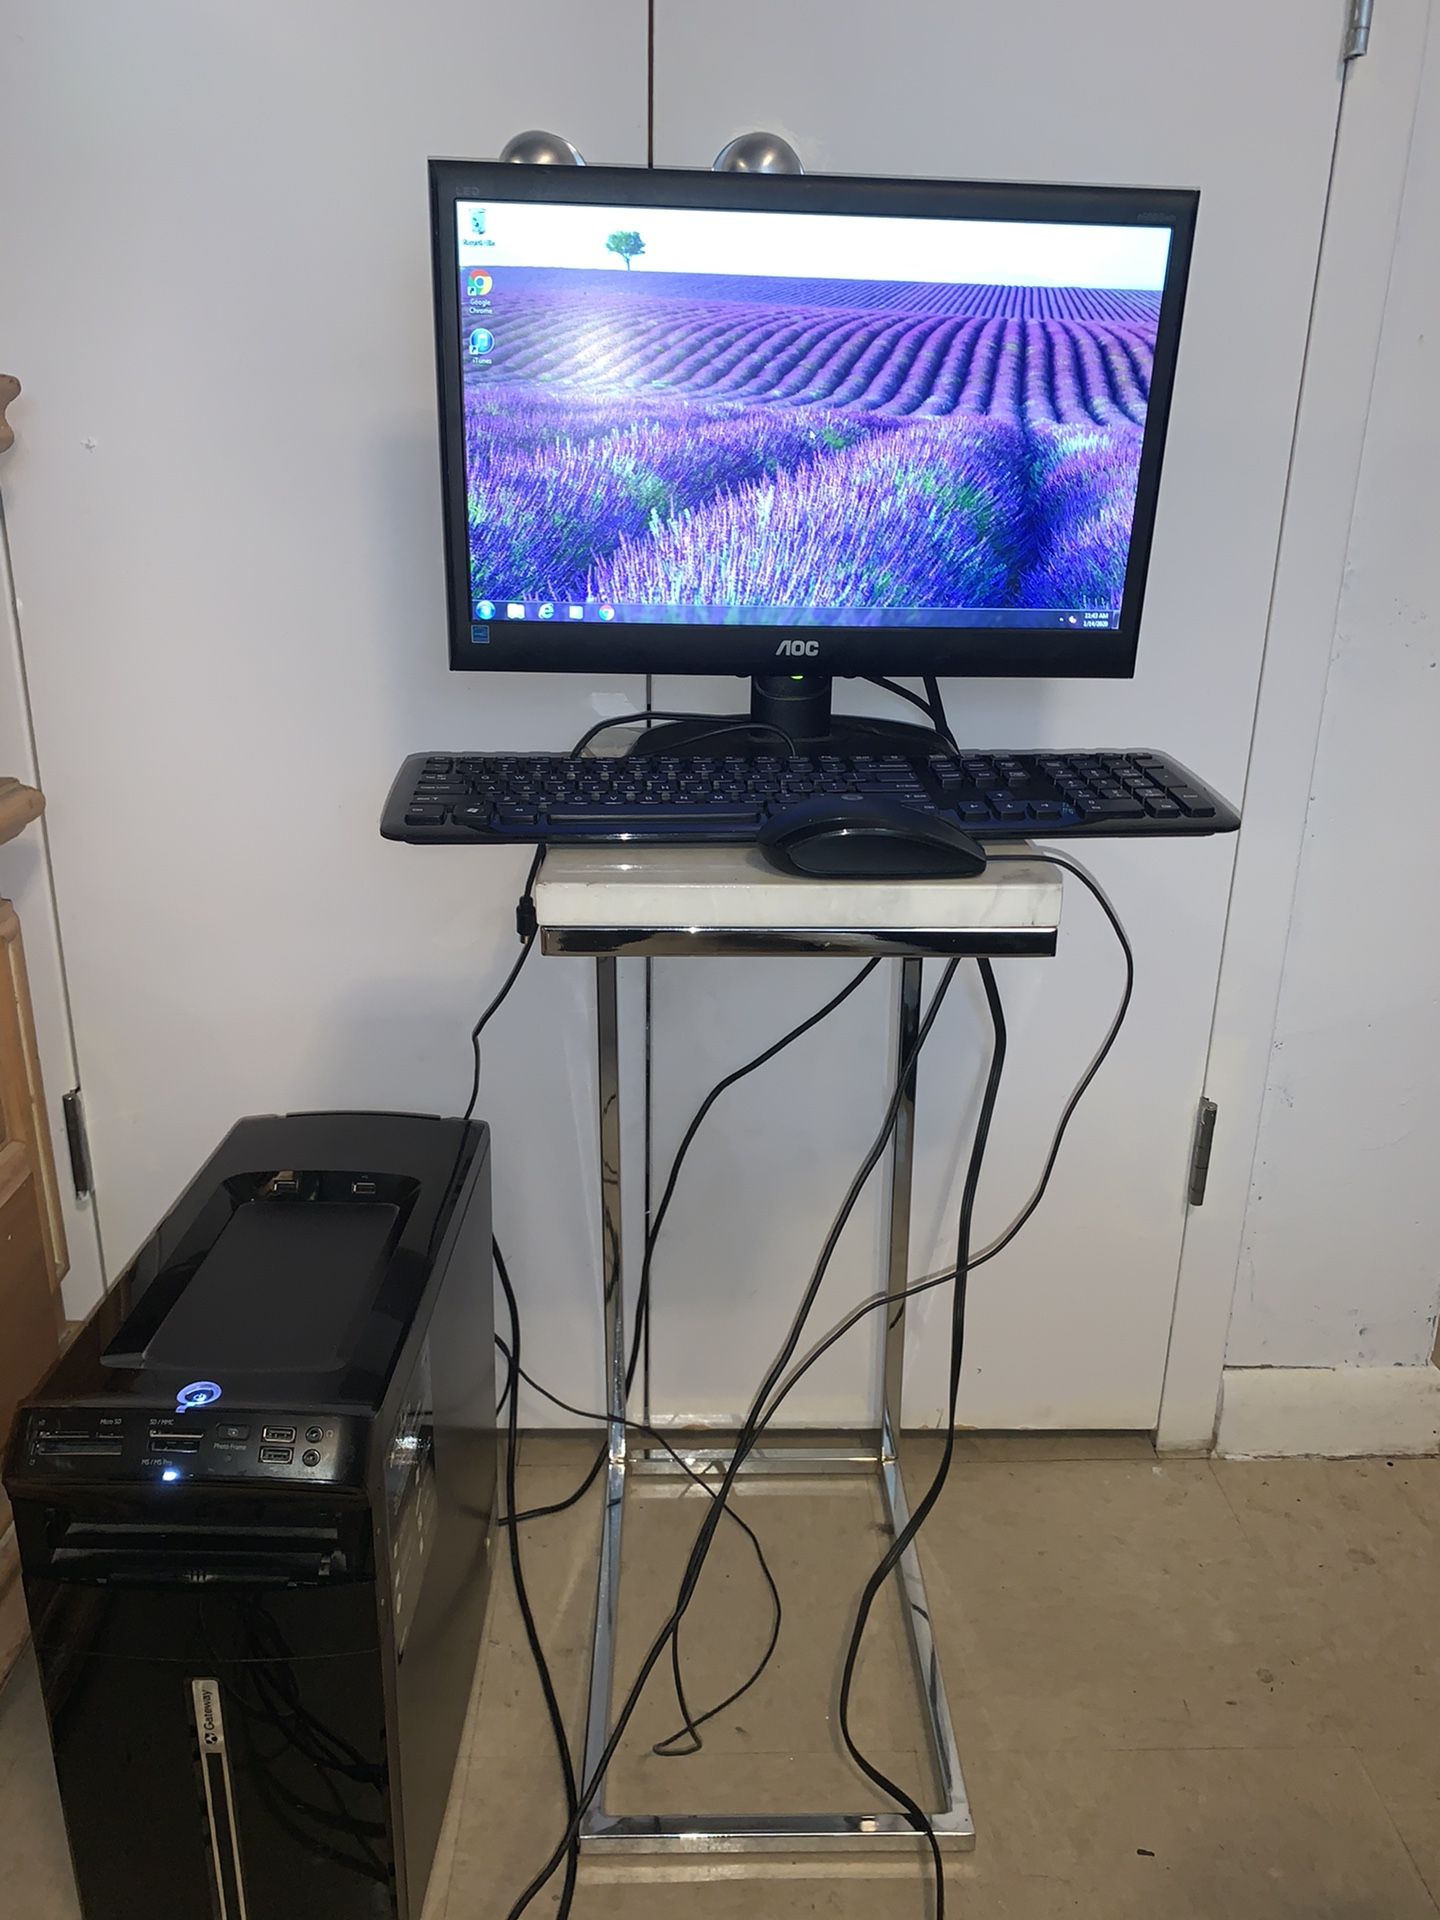 Gateway DX4831 Desktop Computer with Computer Monitor